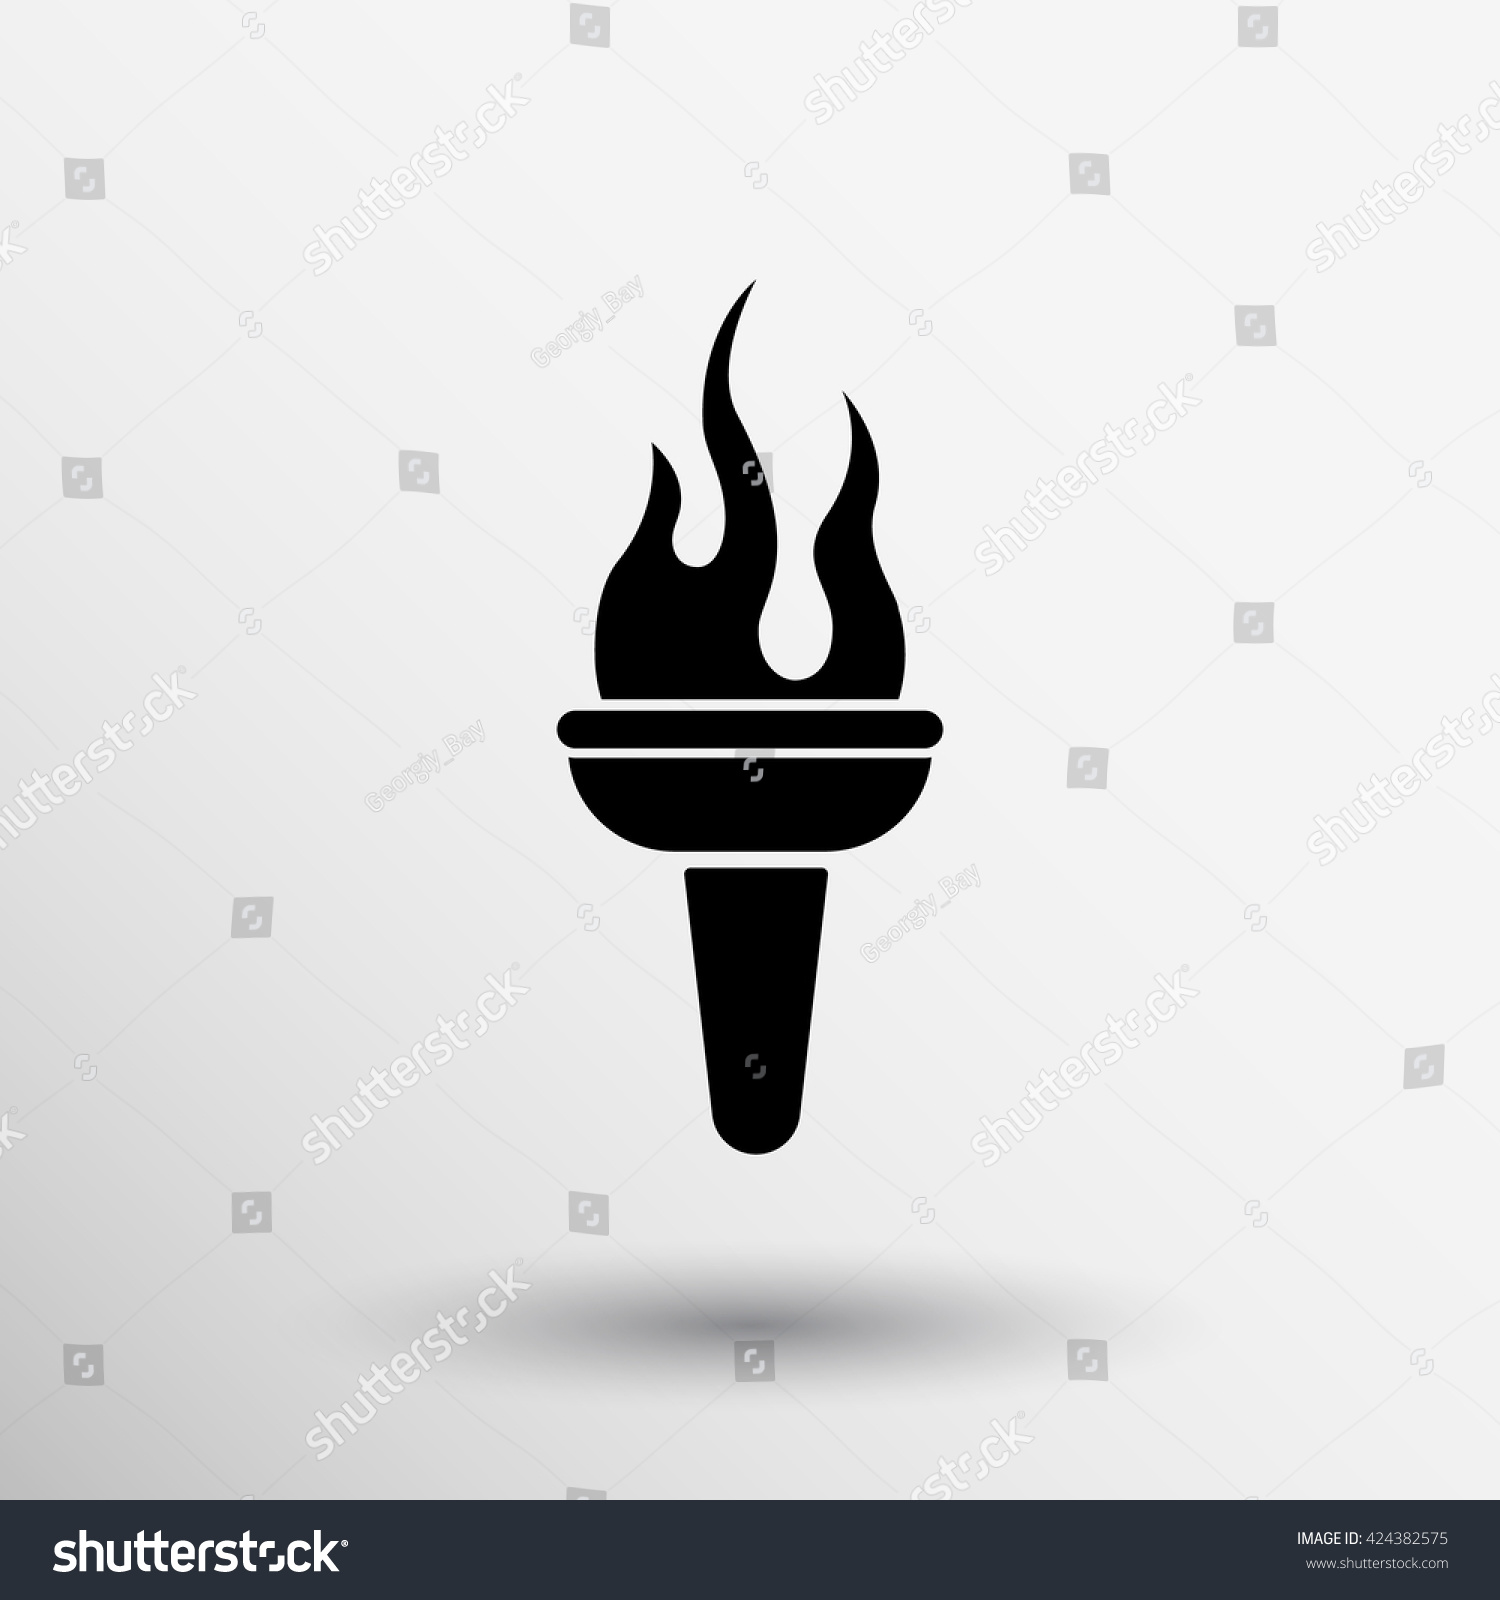 https://image.shutterstock.com/z/stock-vector-burning-torch-icon-olympic-flame-logo-vector-424382575.jpg